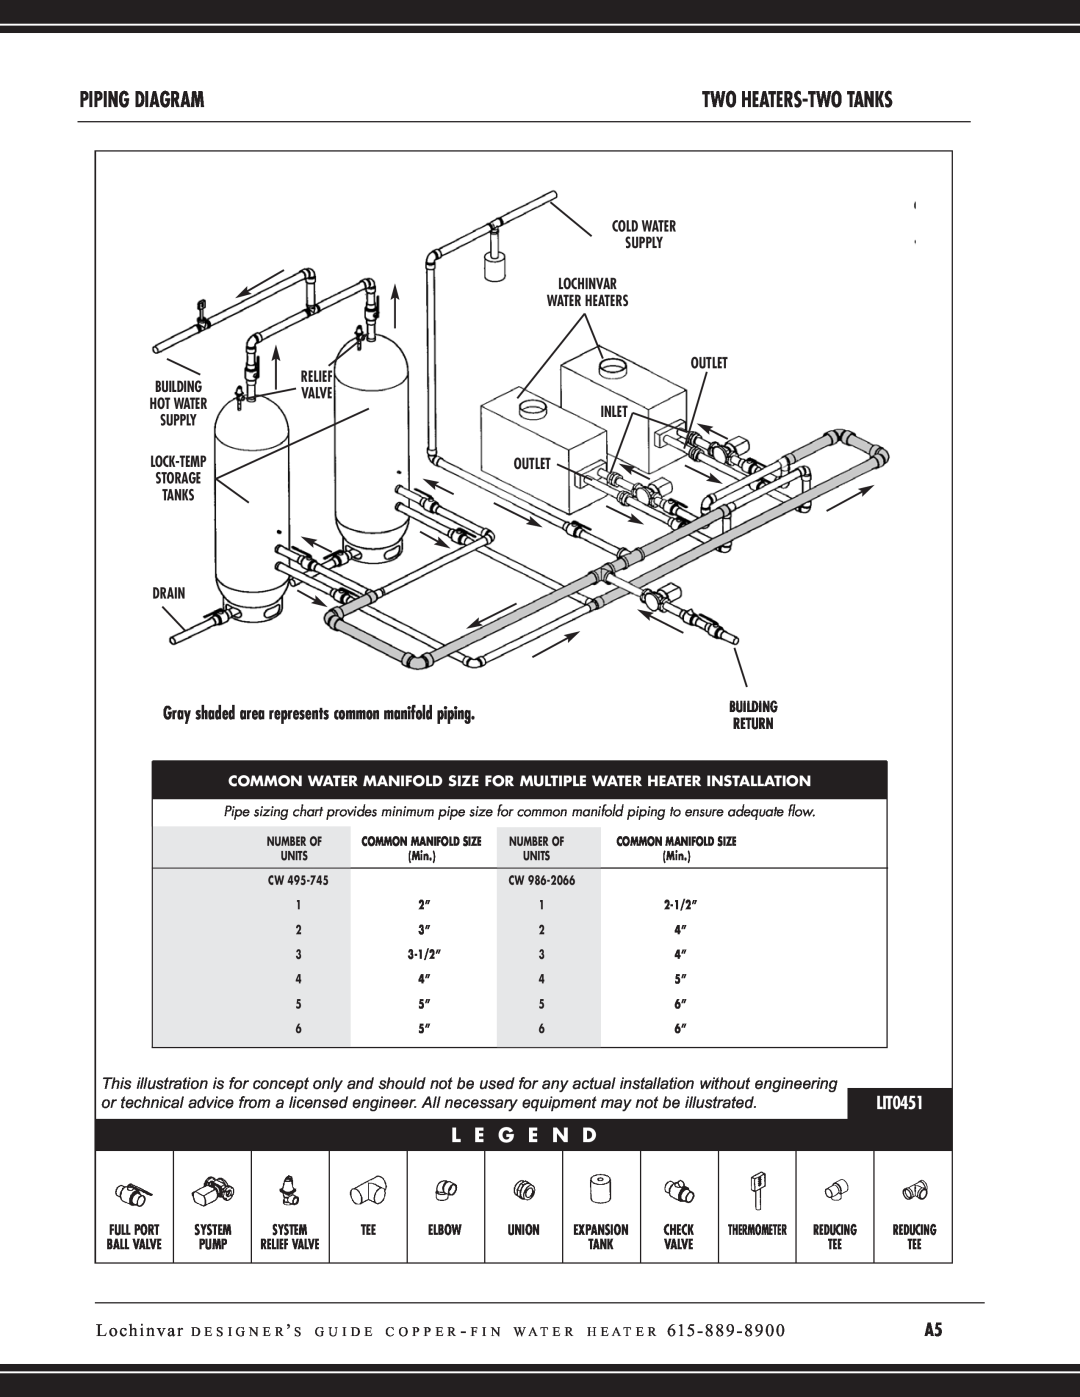 Lochinvar CW 645, CW 745 manual Piping Diagram, L E G E N D, Two Heaters-Twotanks 